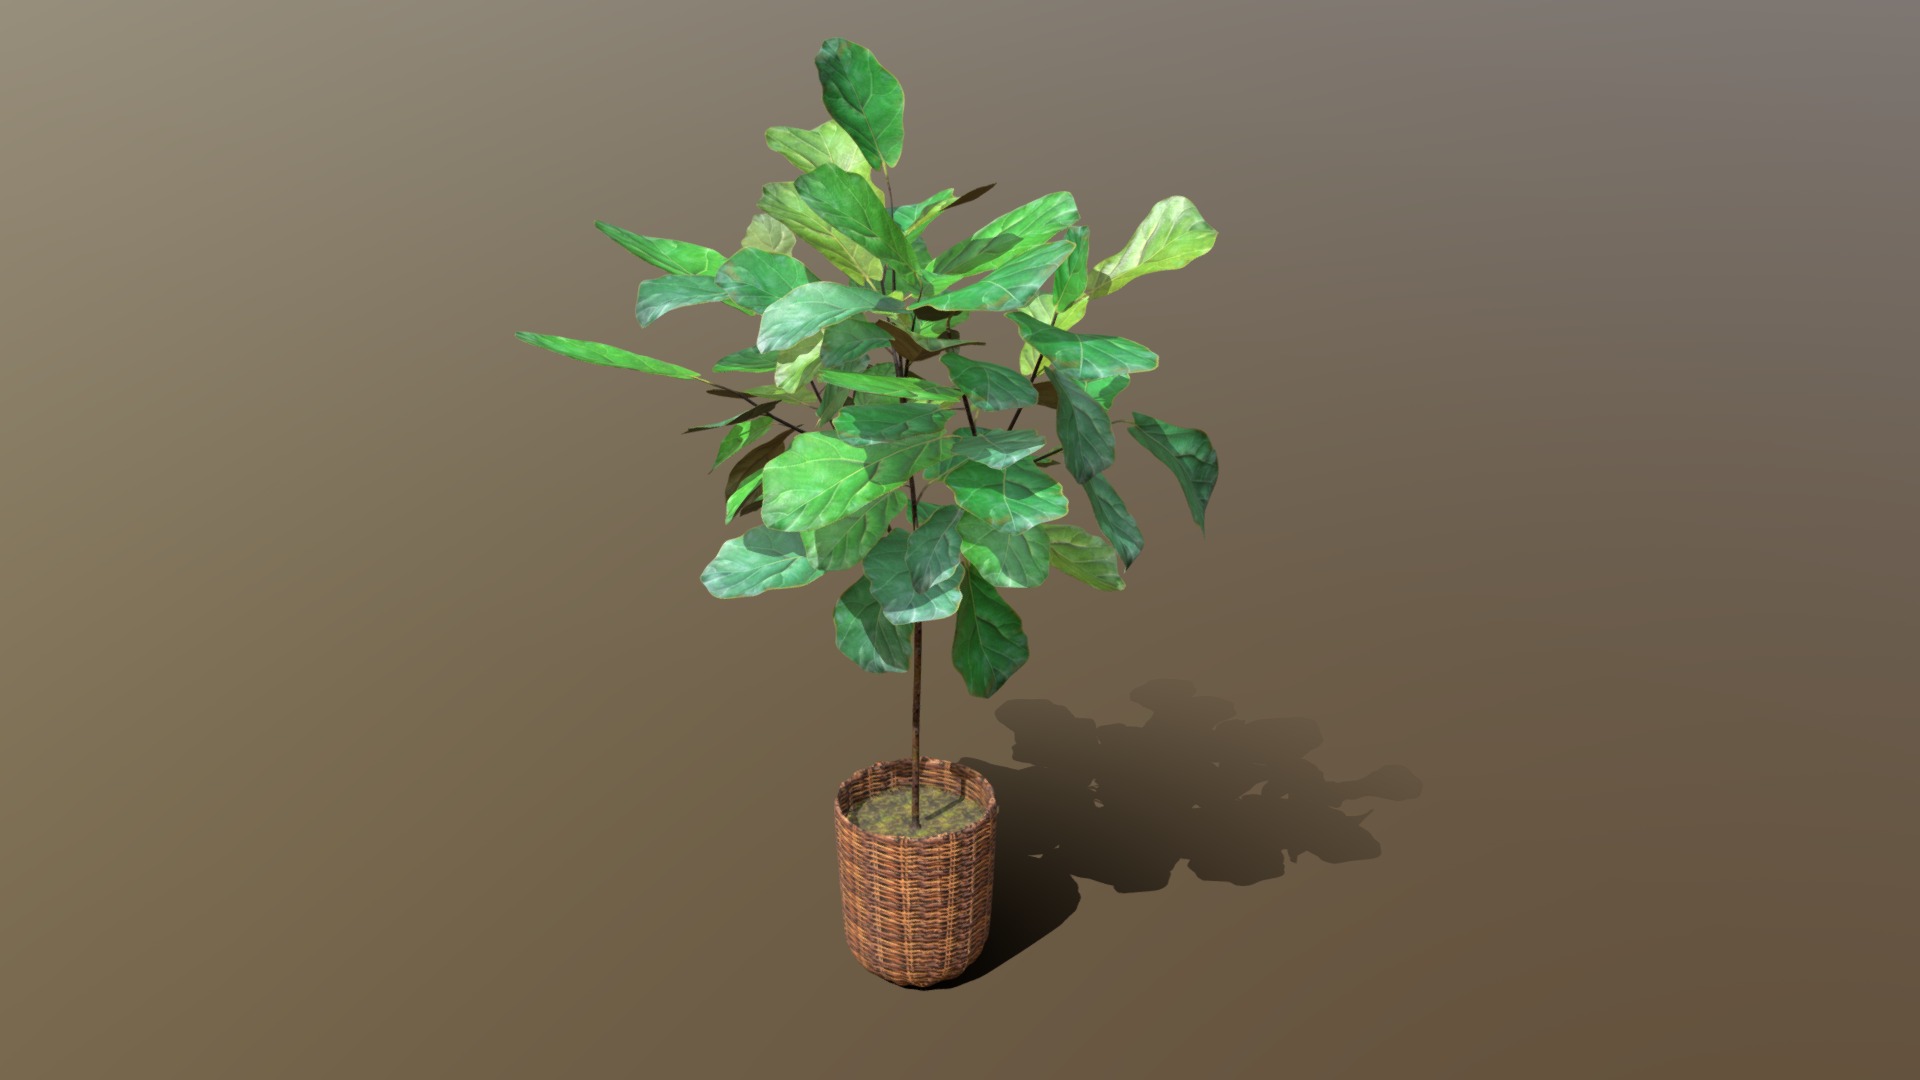 3D model Indoor plant / Ficus lyrata, fiddle leaf fig - This is a 3D model of the Indoor plant / Ficus lyrata, fiddle leaf fig. The 3D model is about a plant in a pot.